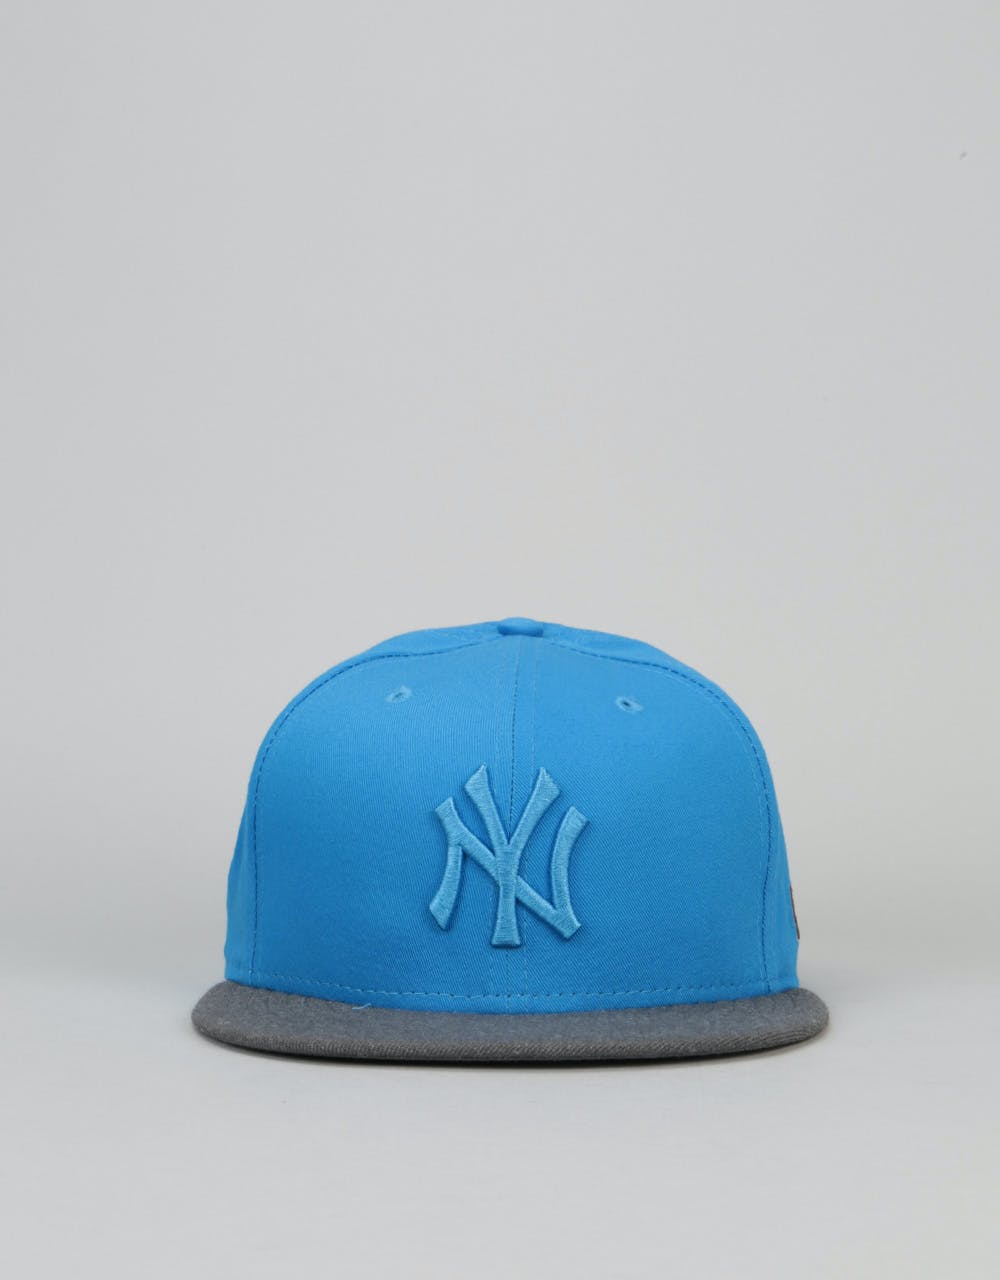 New Era 9Fifty New York Yankees Pop Snapback Cap - Heather/Blue